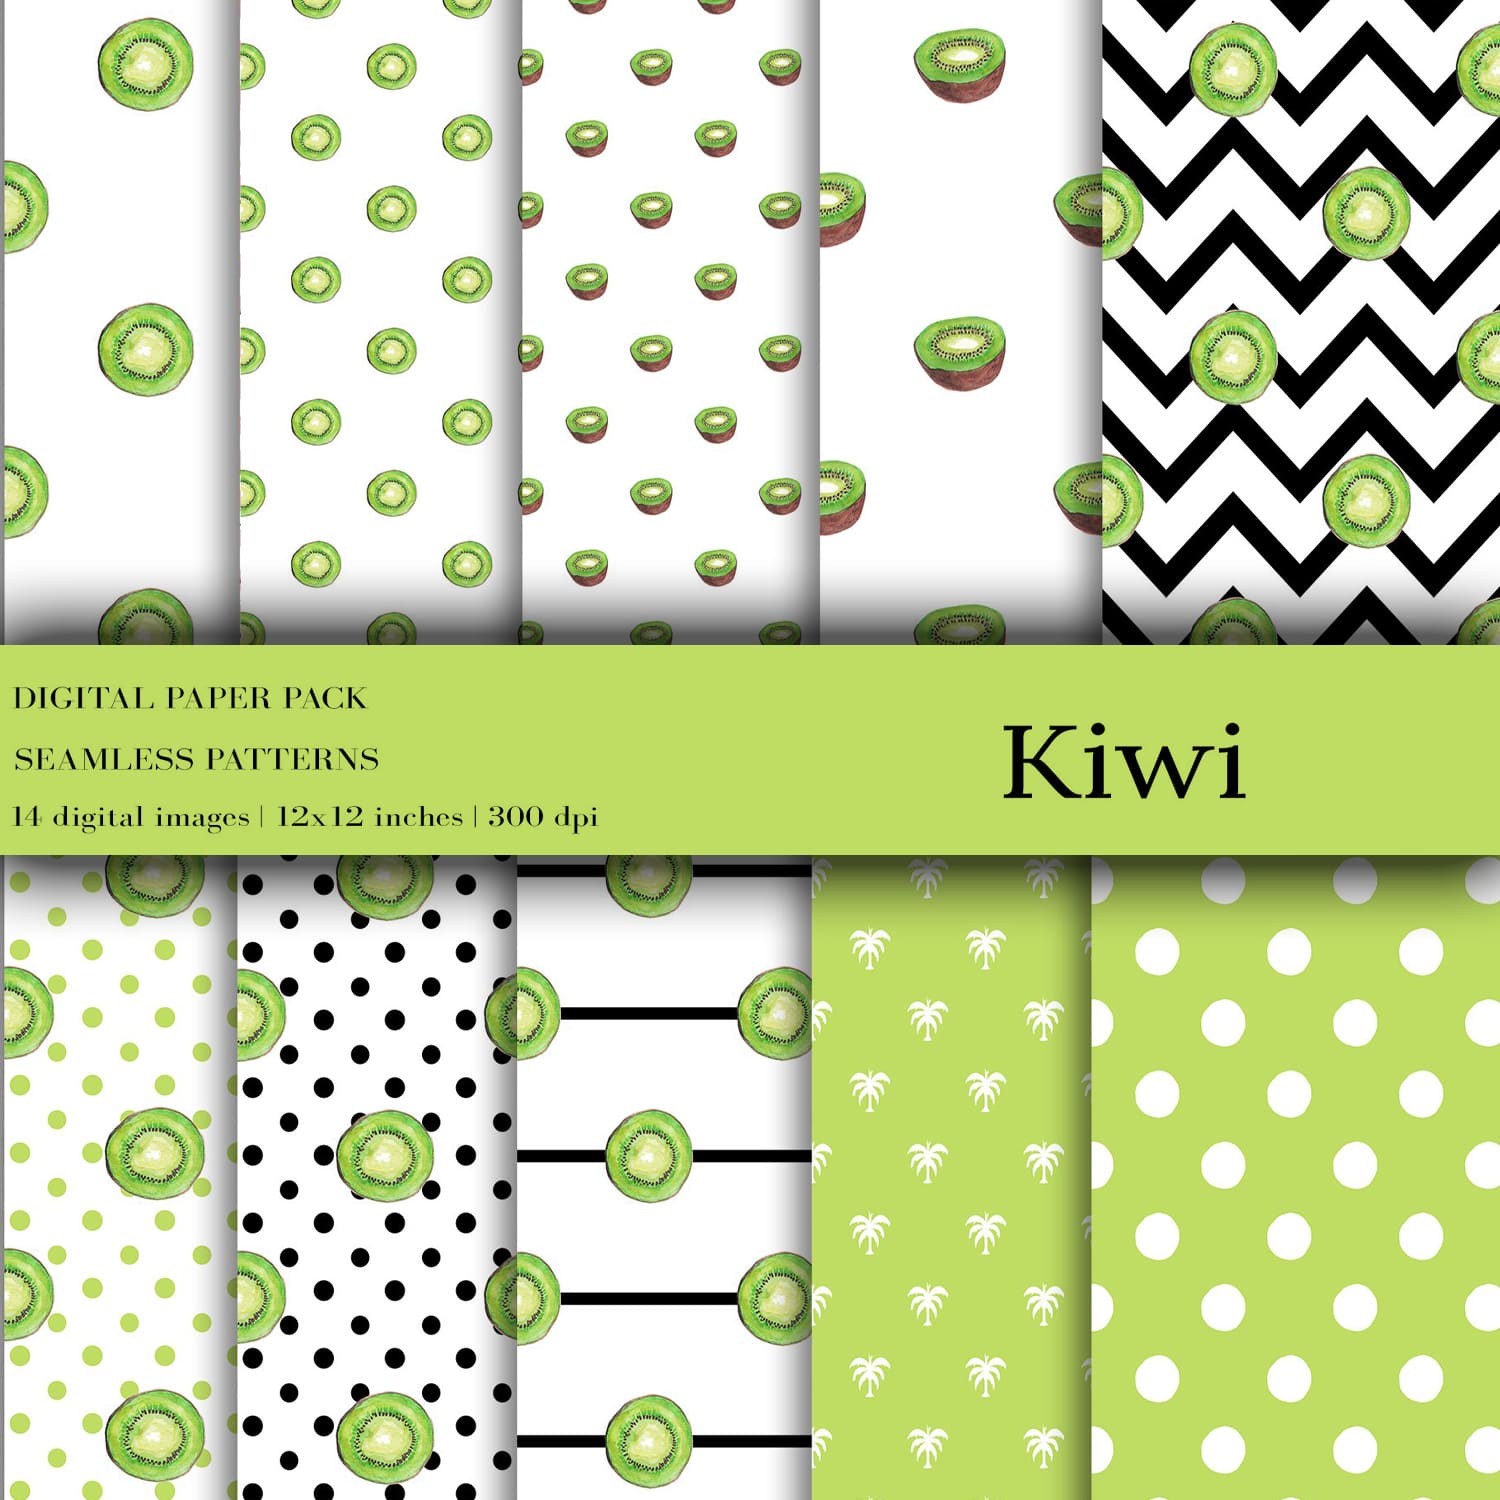 Fruit Digital Papers, Kiwi Patterns, Summer Digital Papers cover.